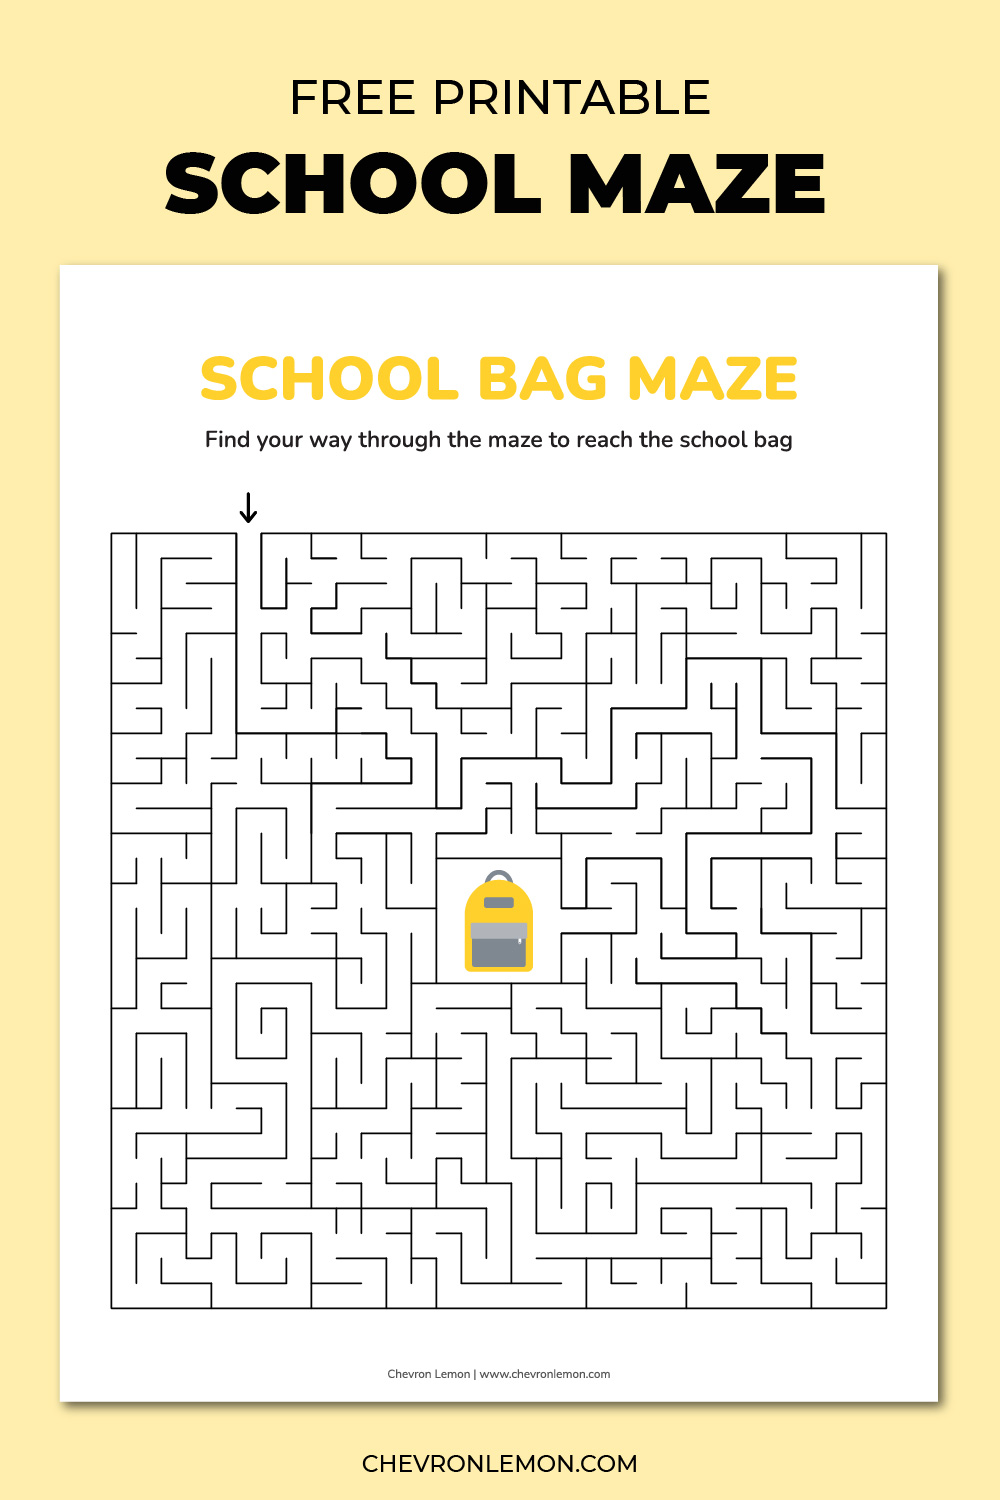 School bag maze